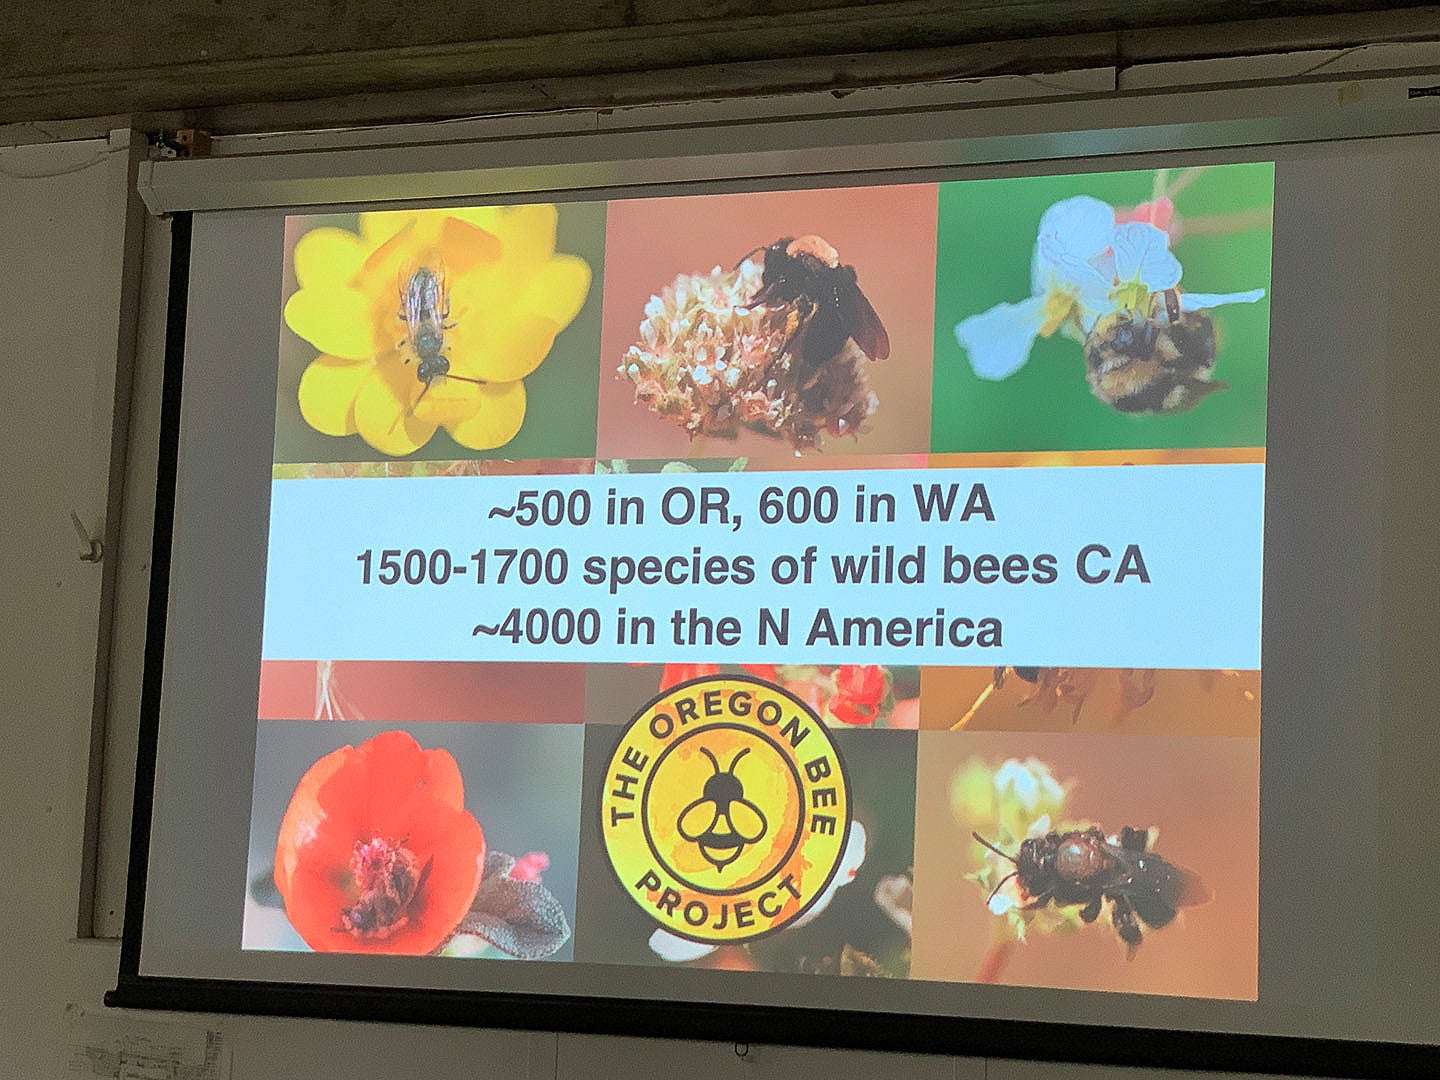 The Oregon Bee Project Presentation